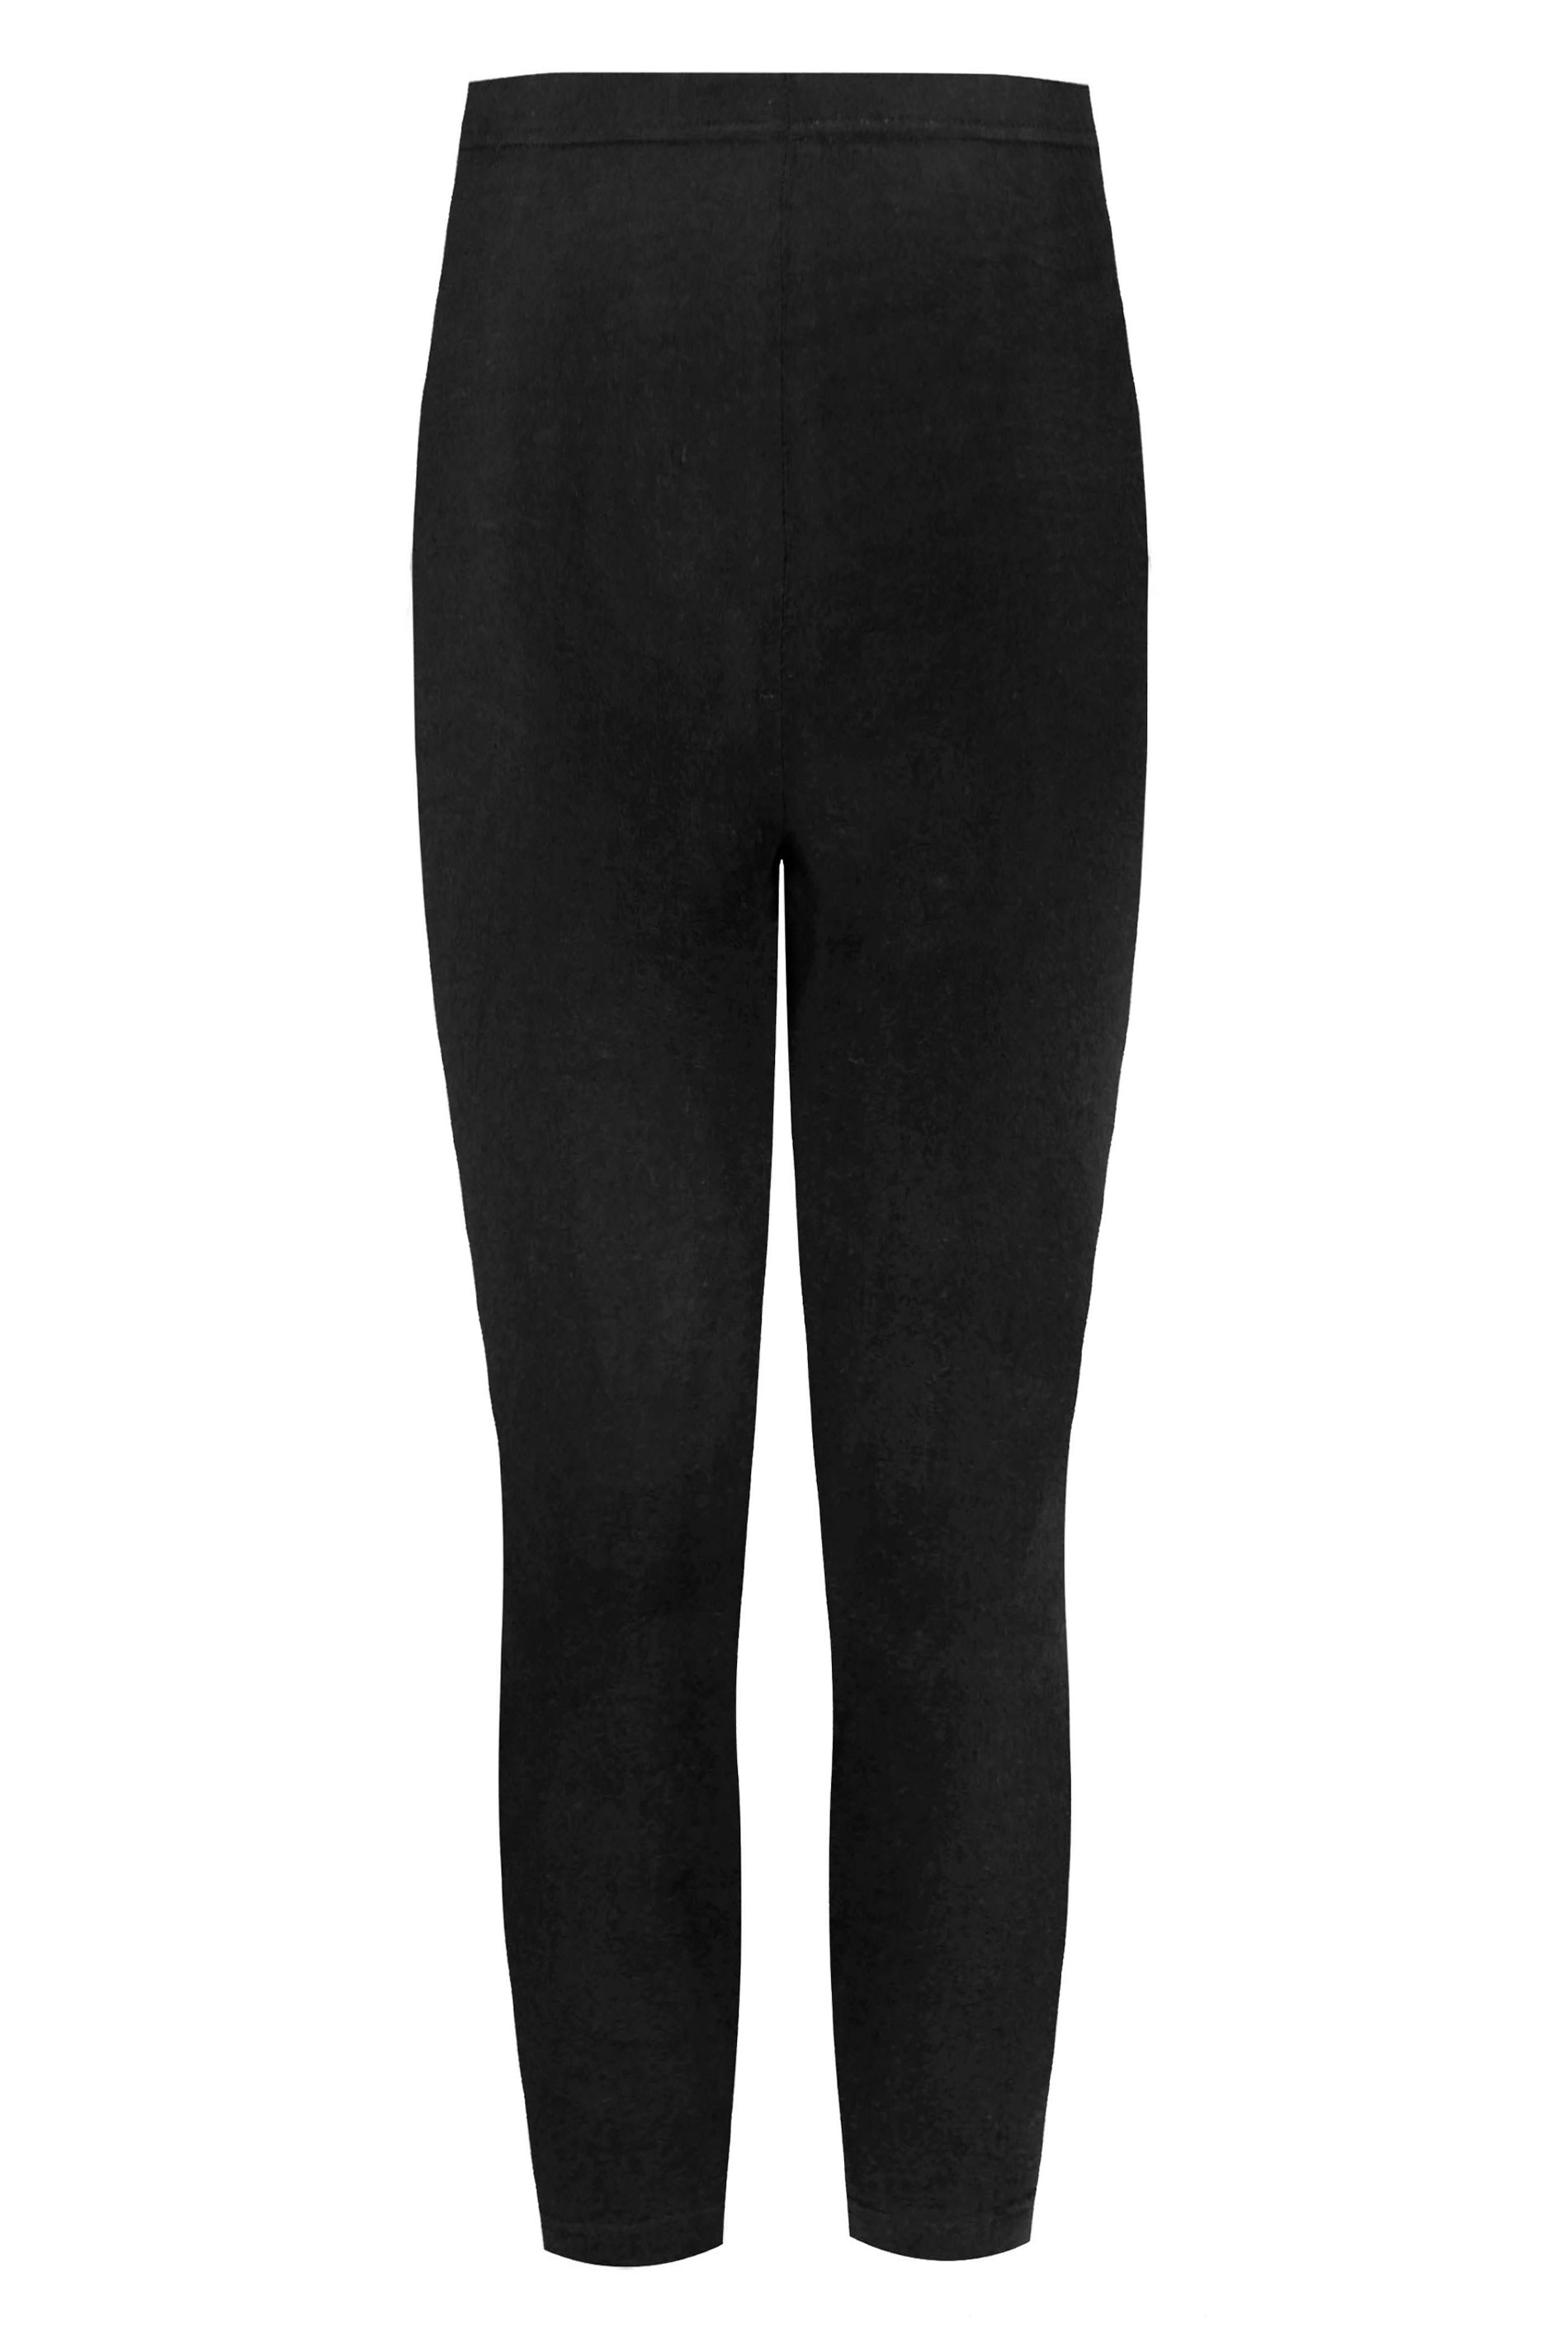 LTS Tall Womens Black Faux Leather Stripe Leggings | Long Tall Sally | Long  tall sally, Ponte leggings, Striped leggings